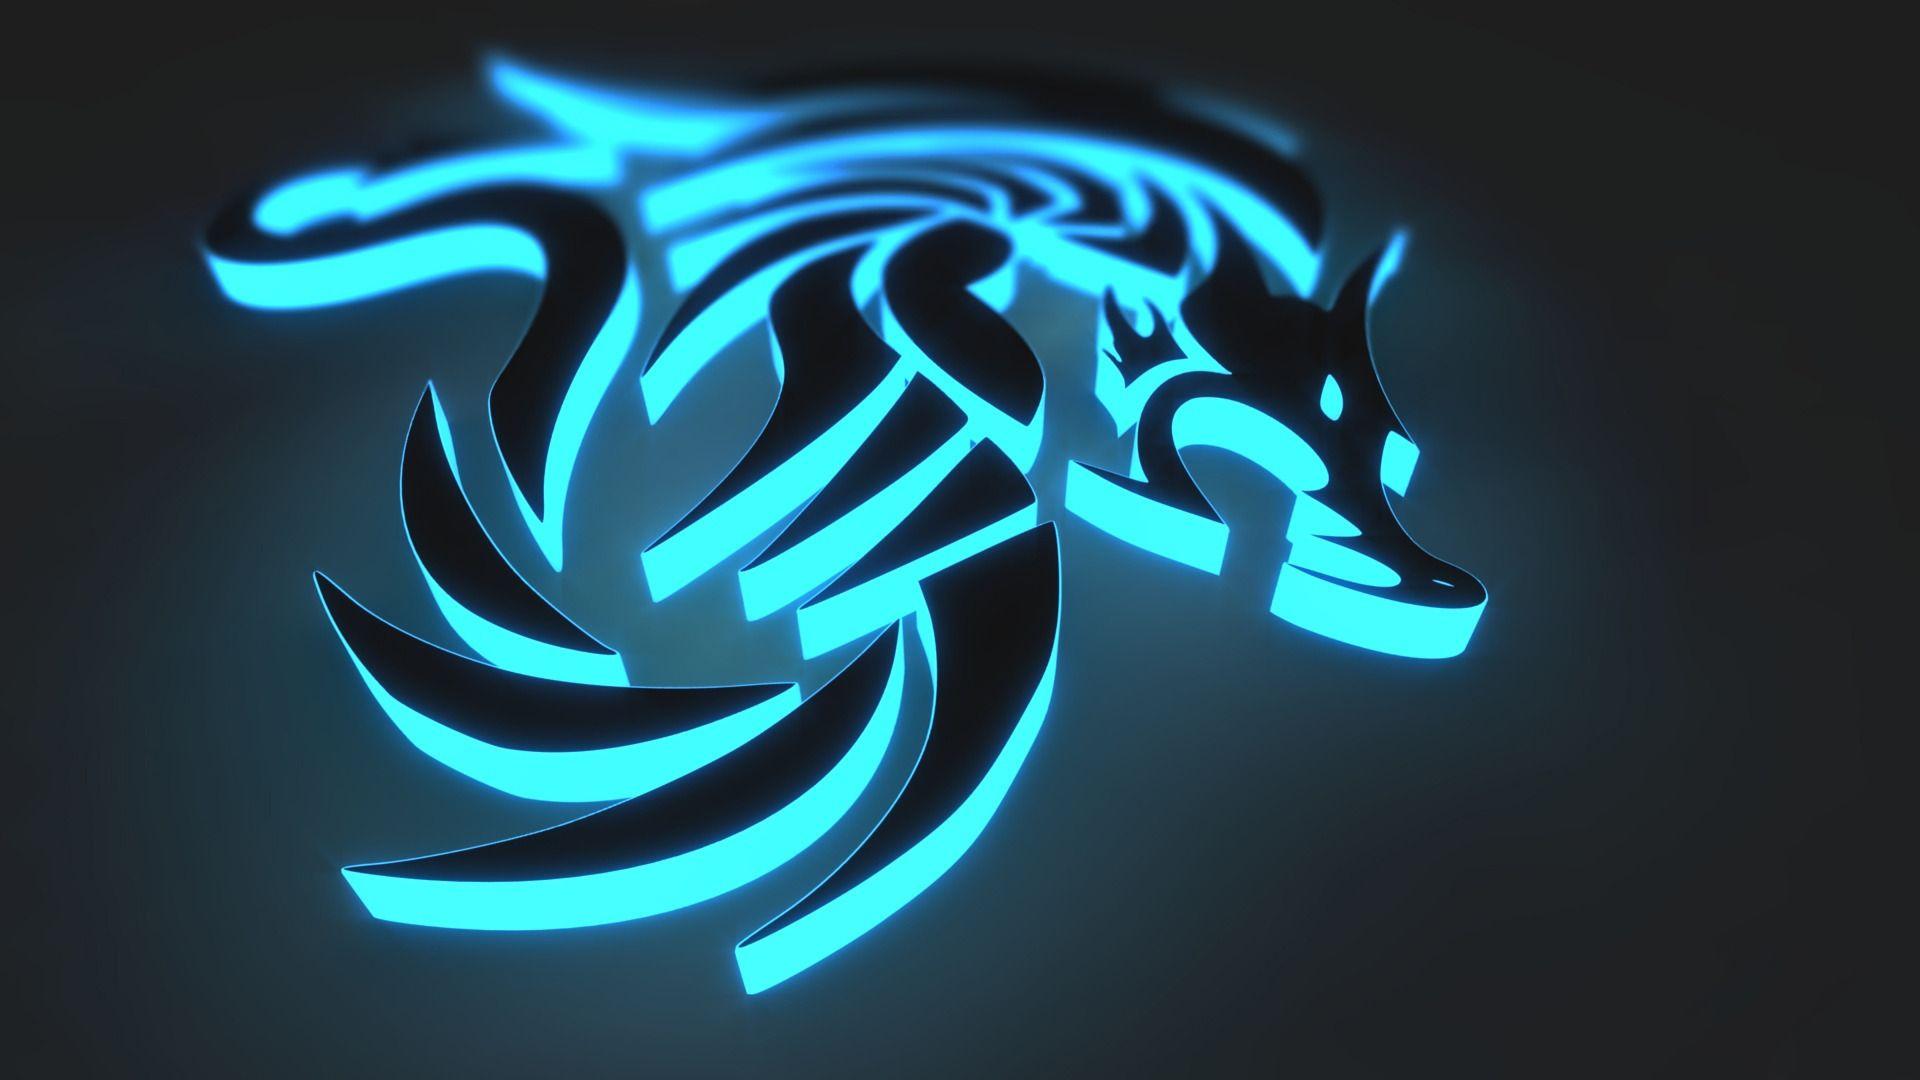 Cool Dragon Logo - Cool 3D Dragon Wallpaper | Ideas for the House | Wallpaper, Live ...